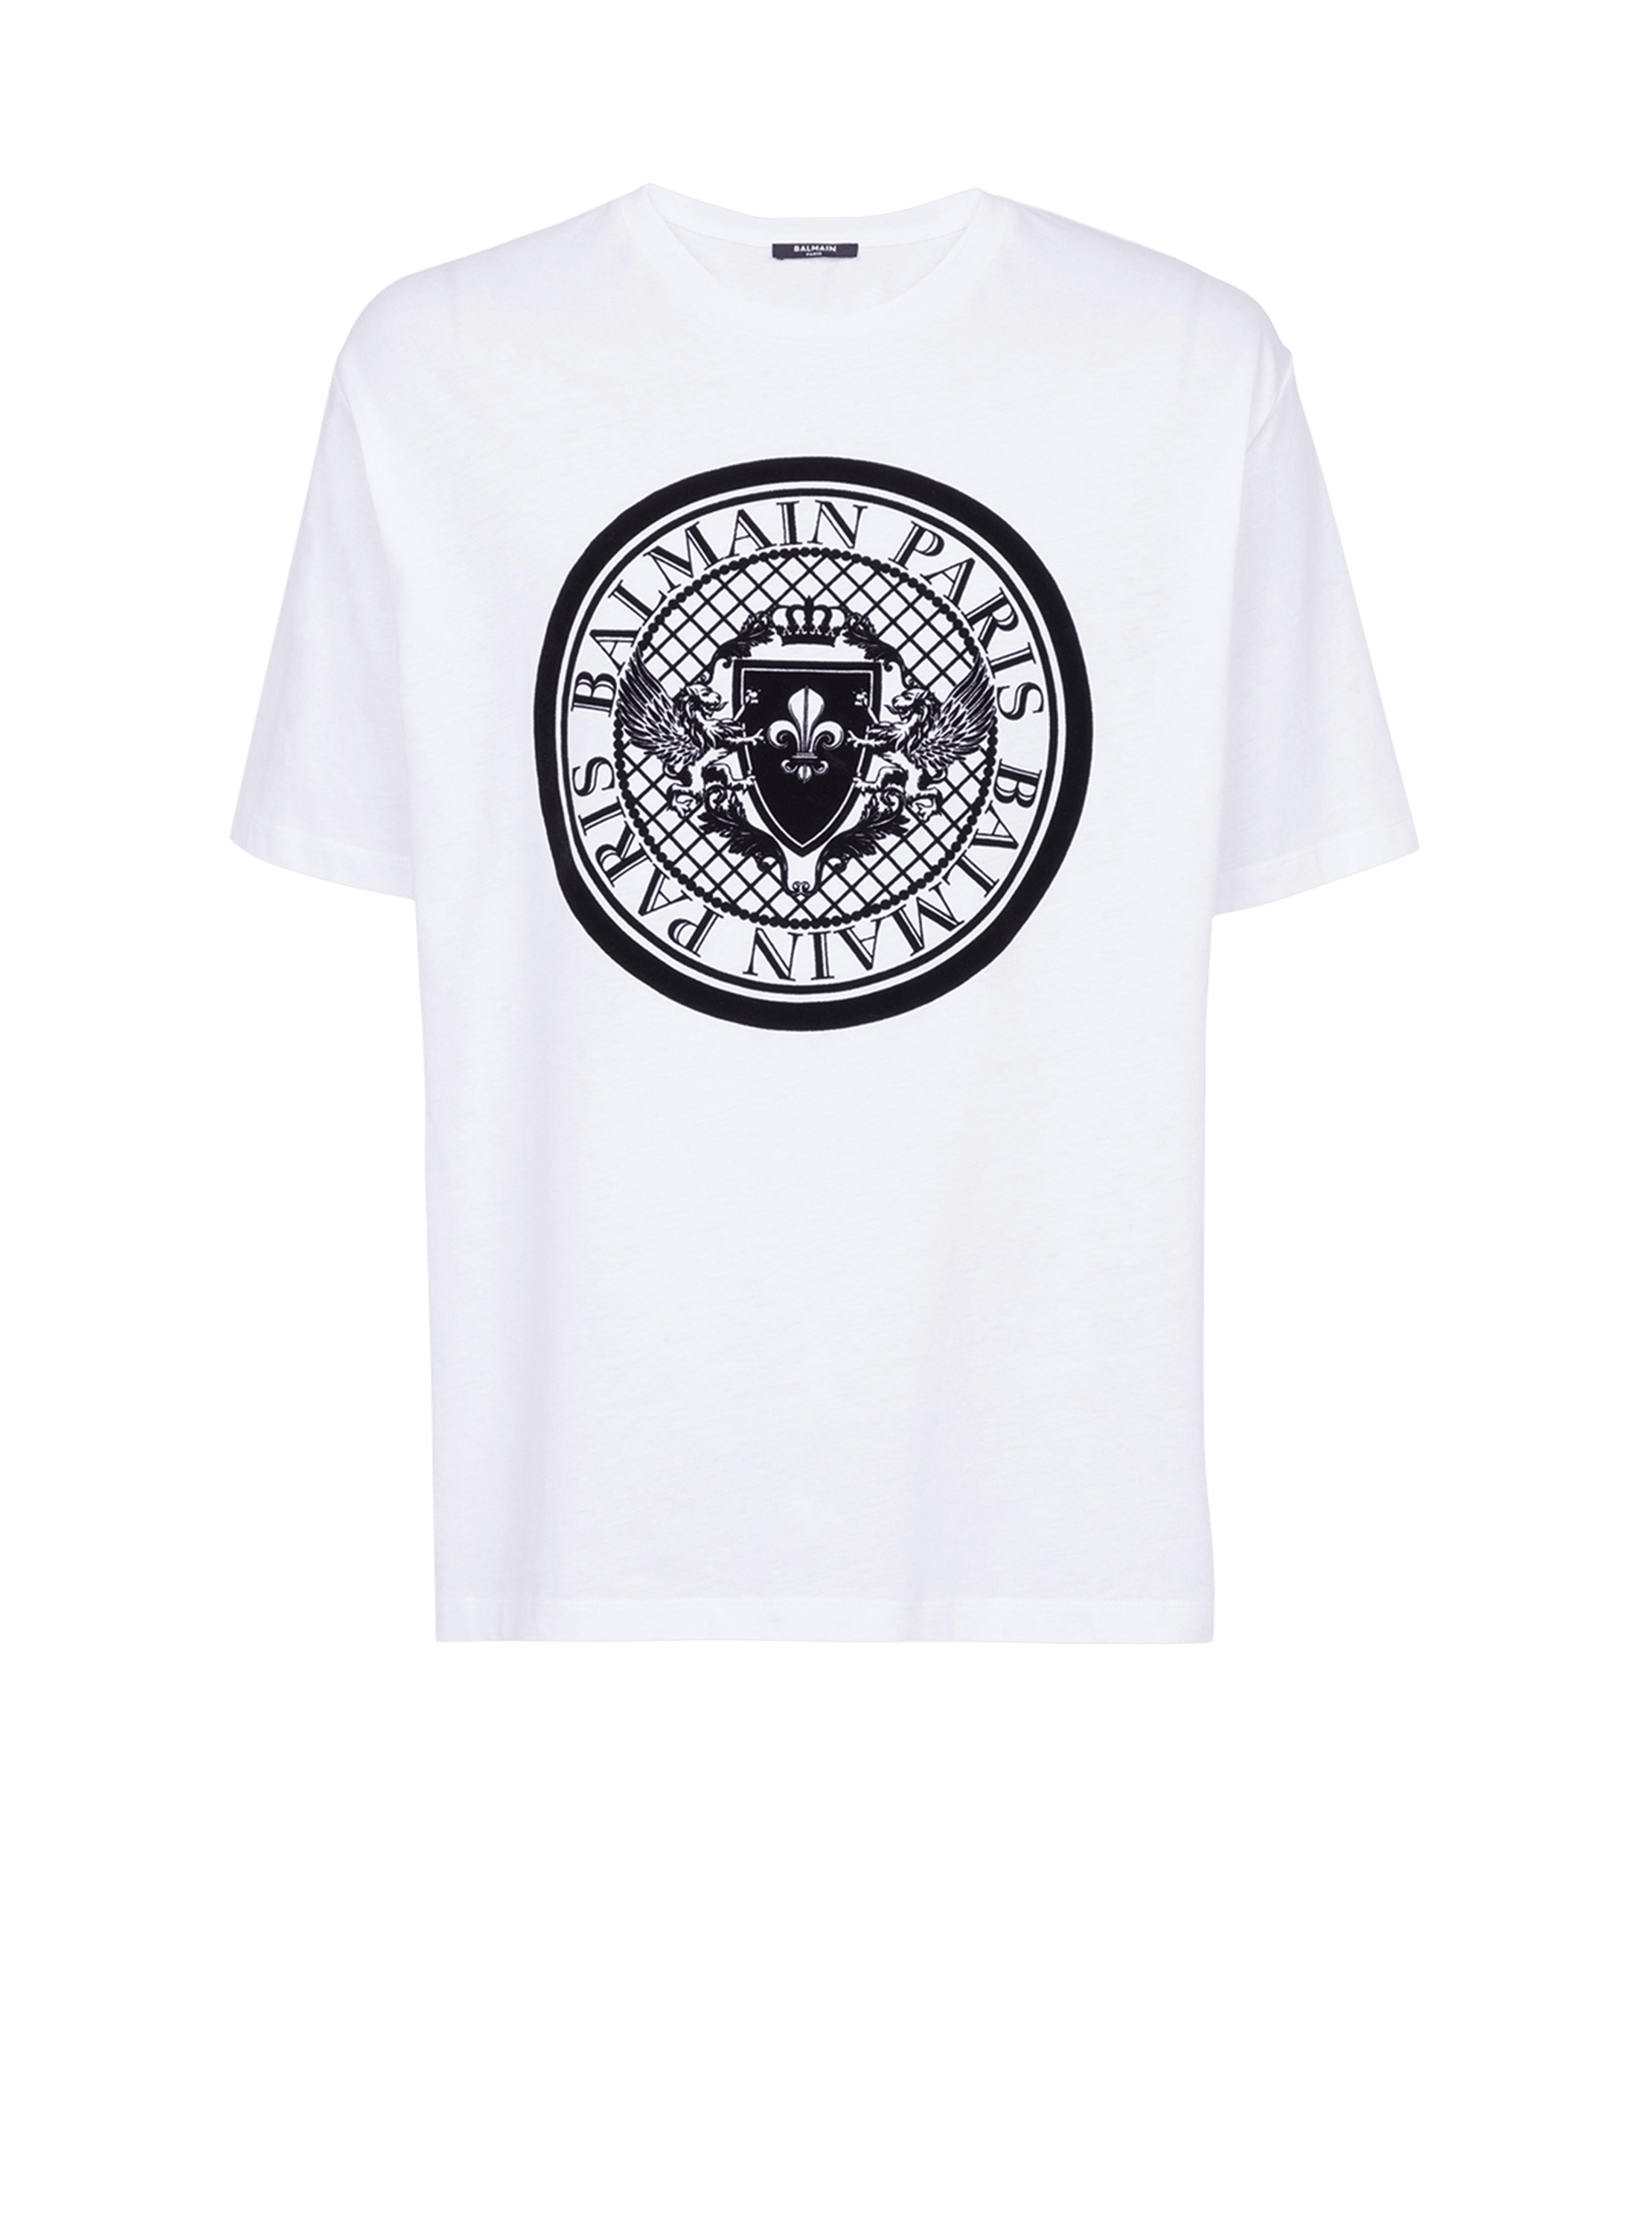 Balmain White Feather T-Shirt